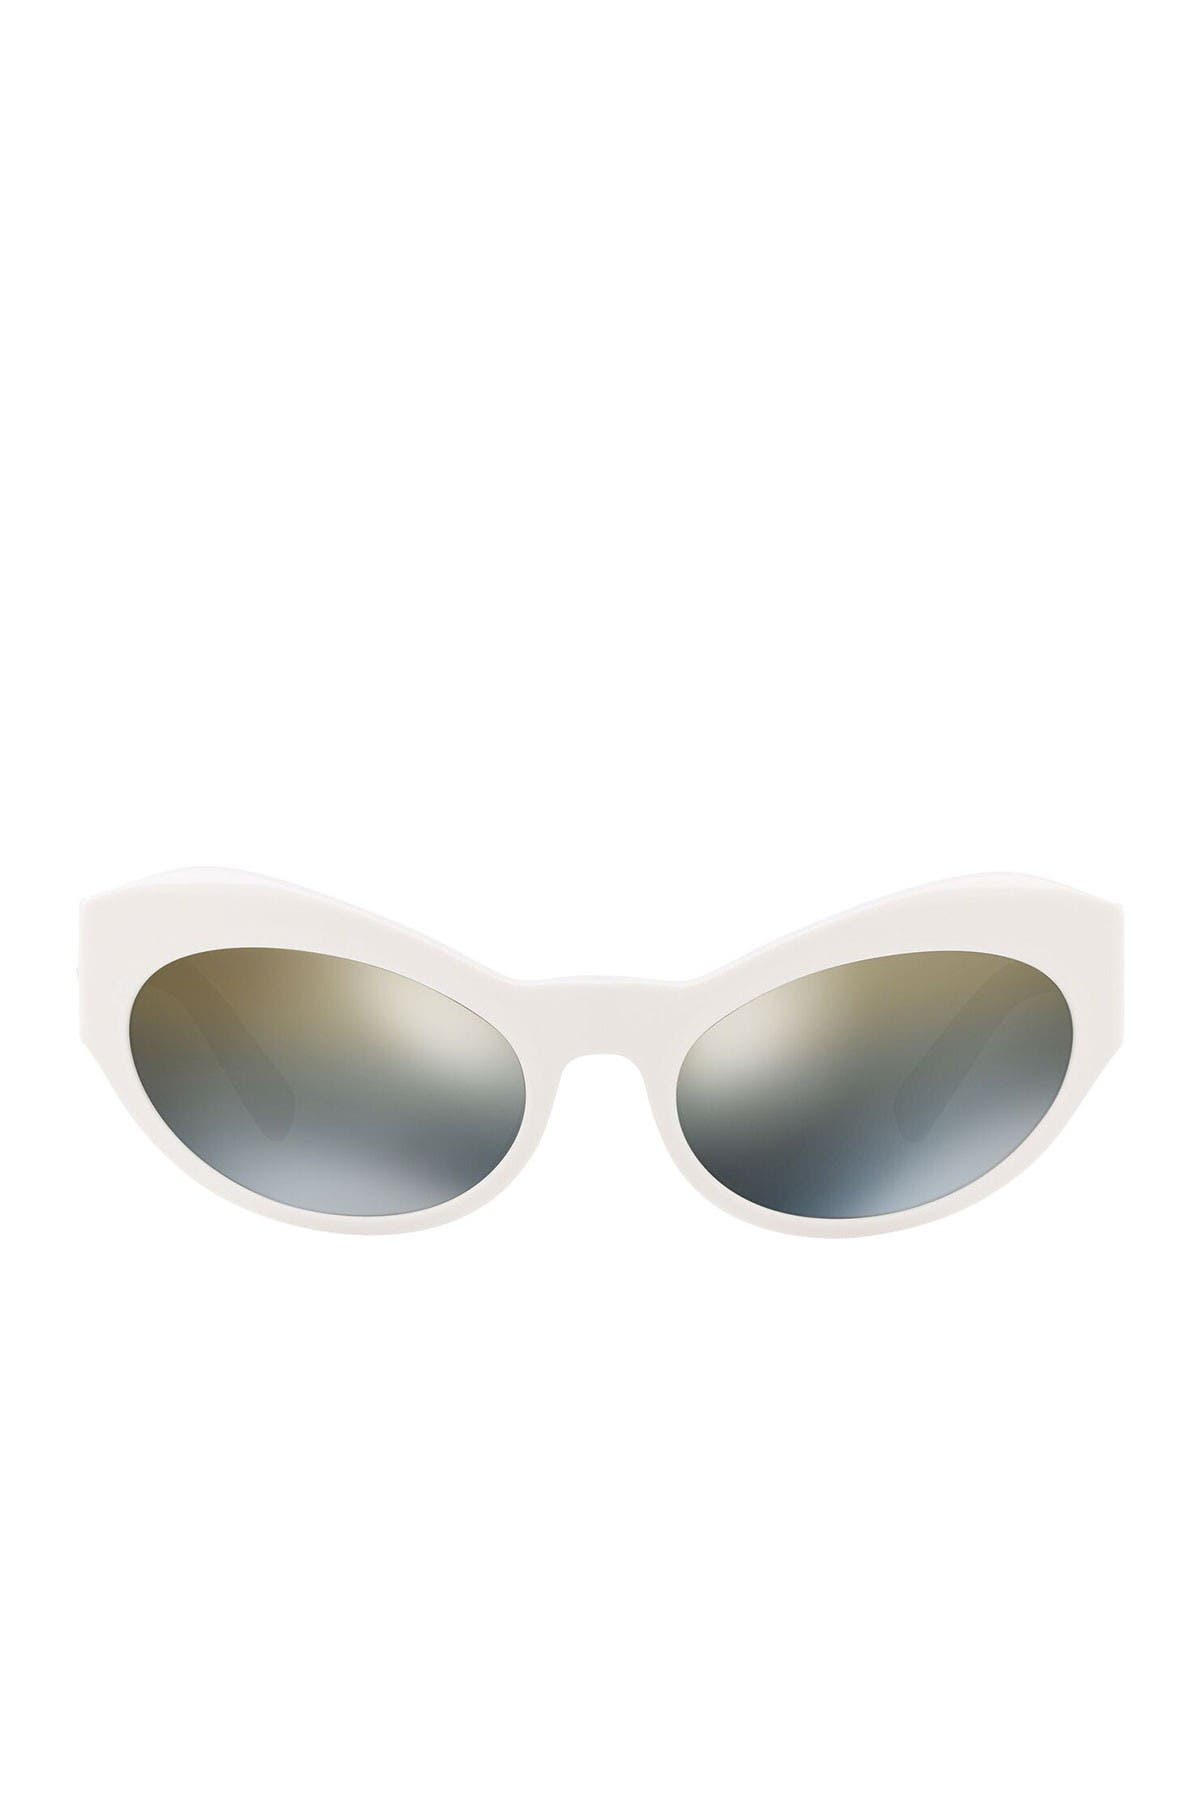 Versace | 54mm Butterfly Sunglasses 